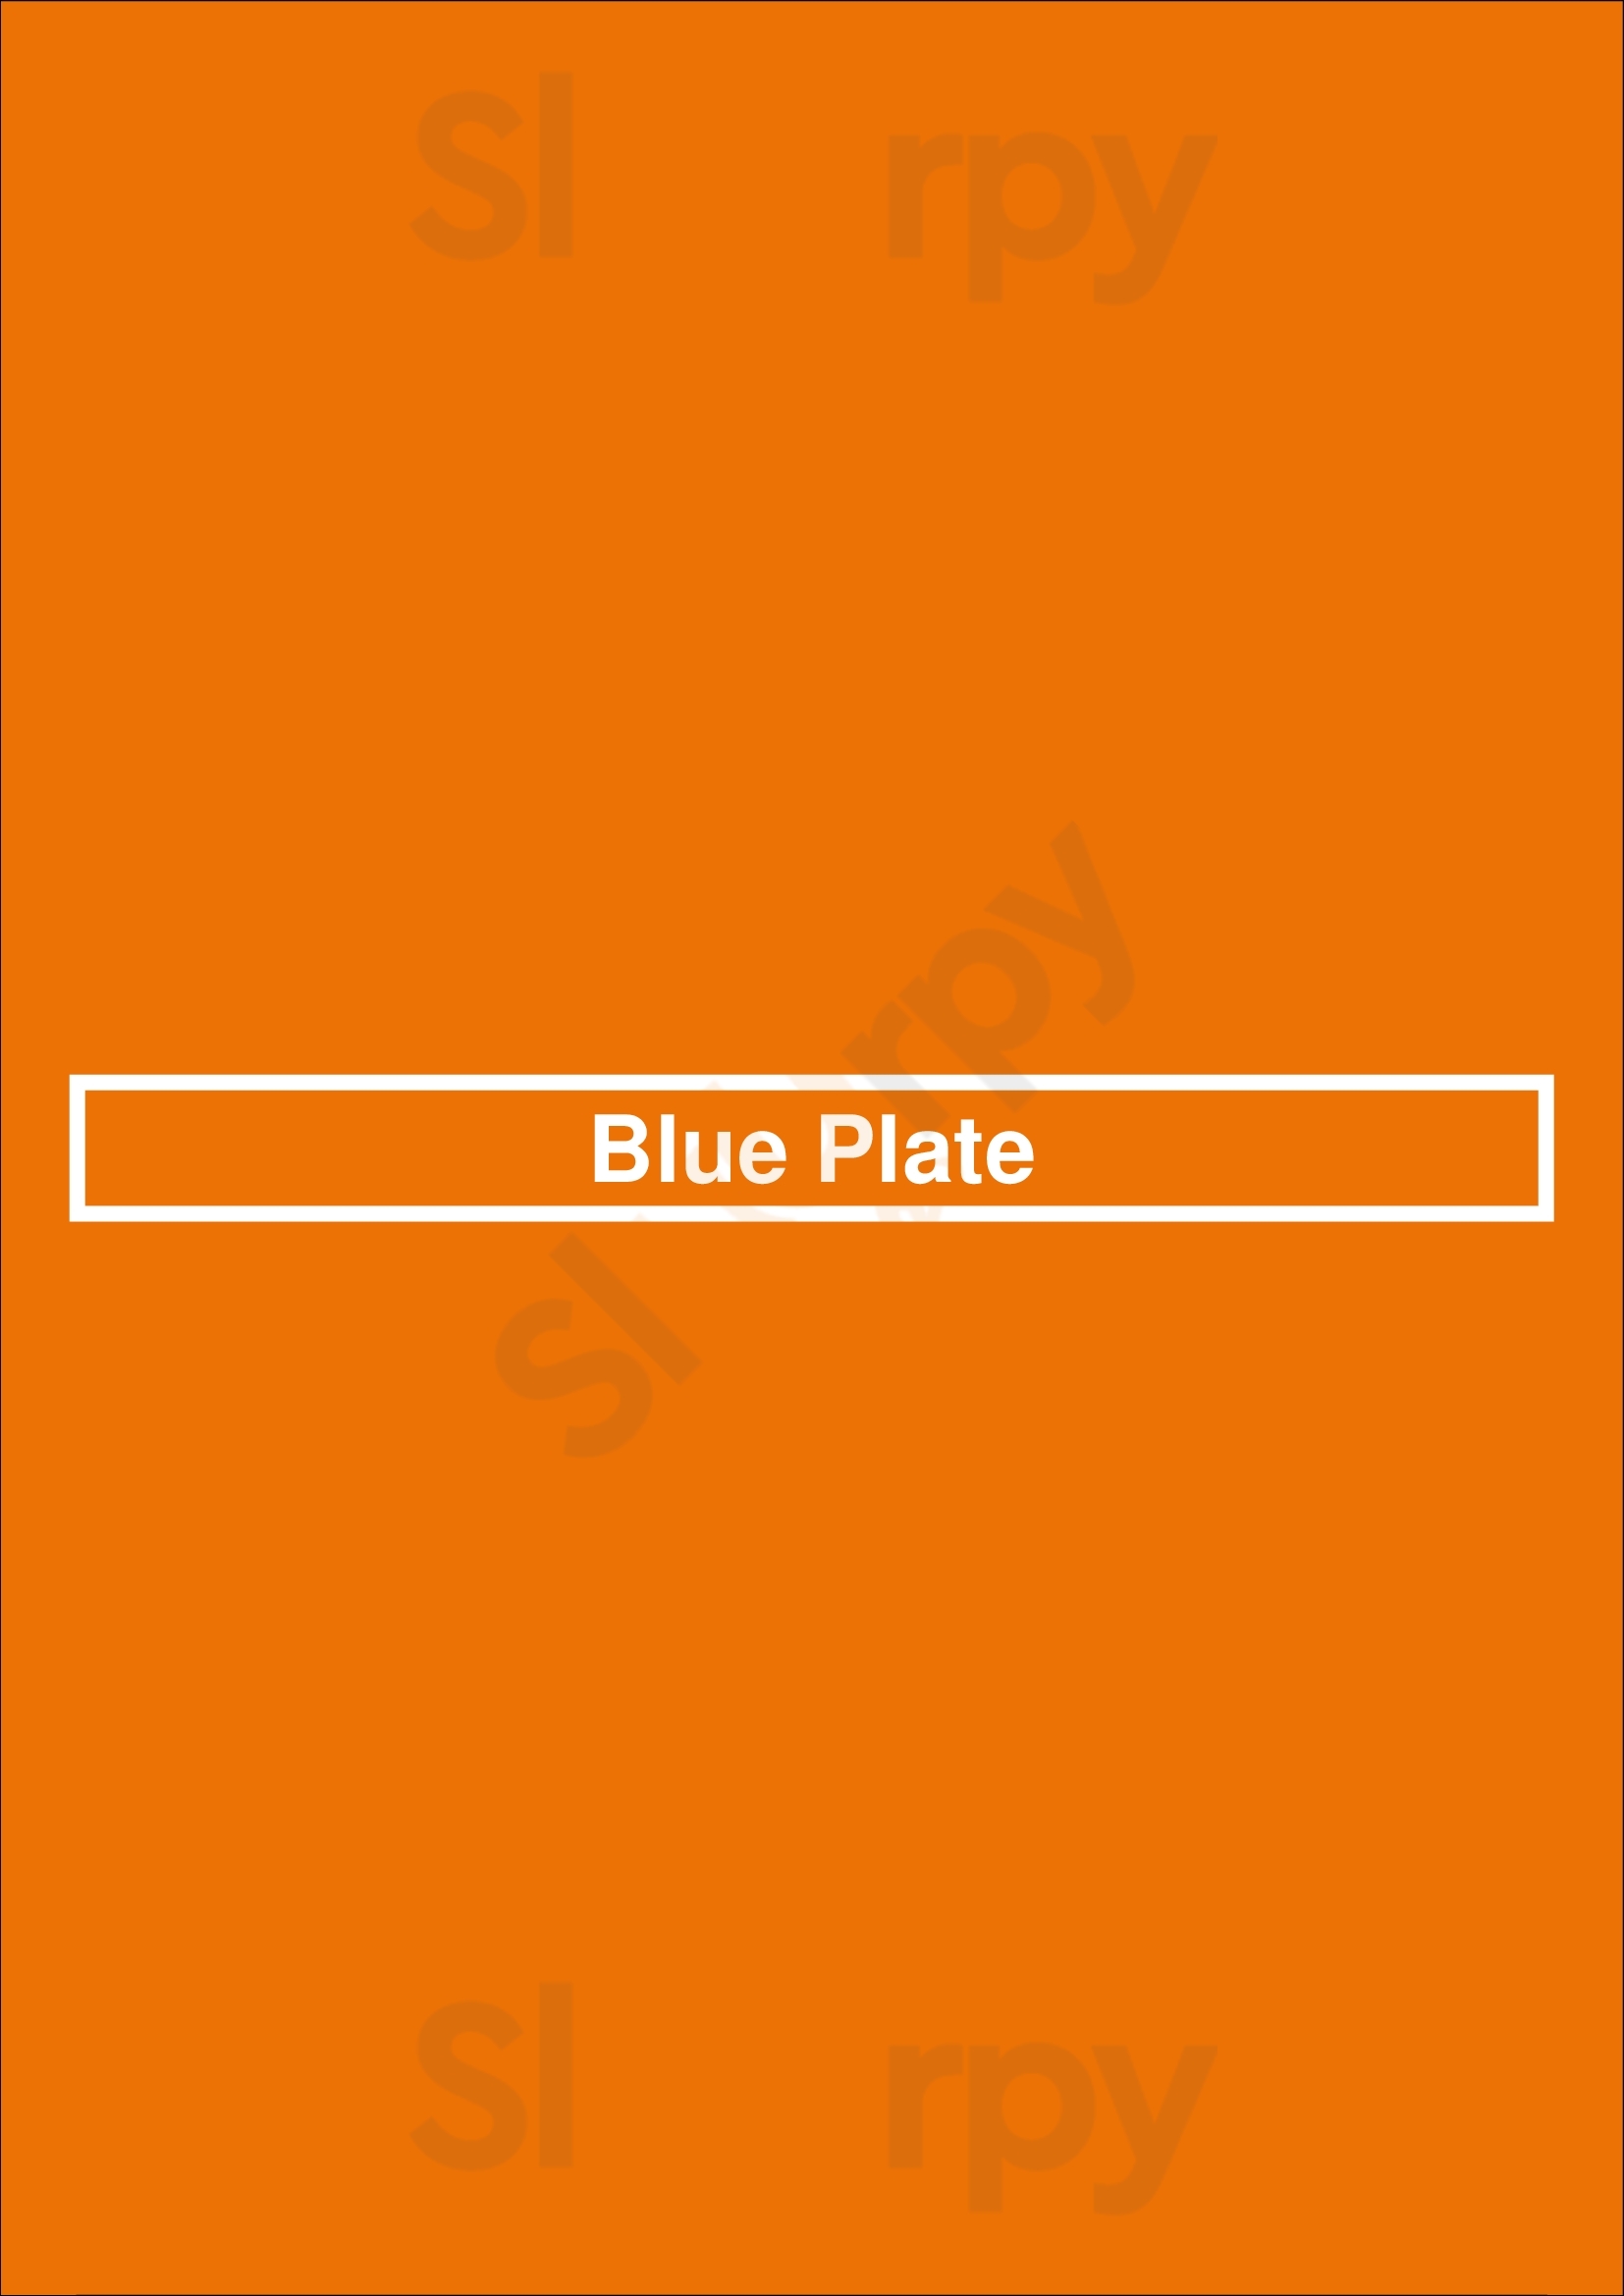 Blue Plate San Francisco Menu - 1